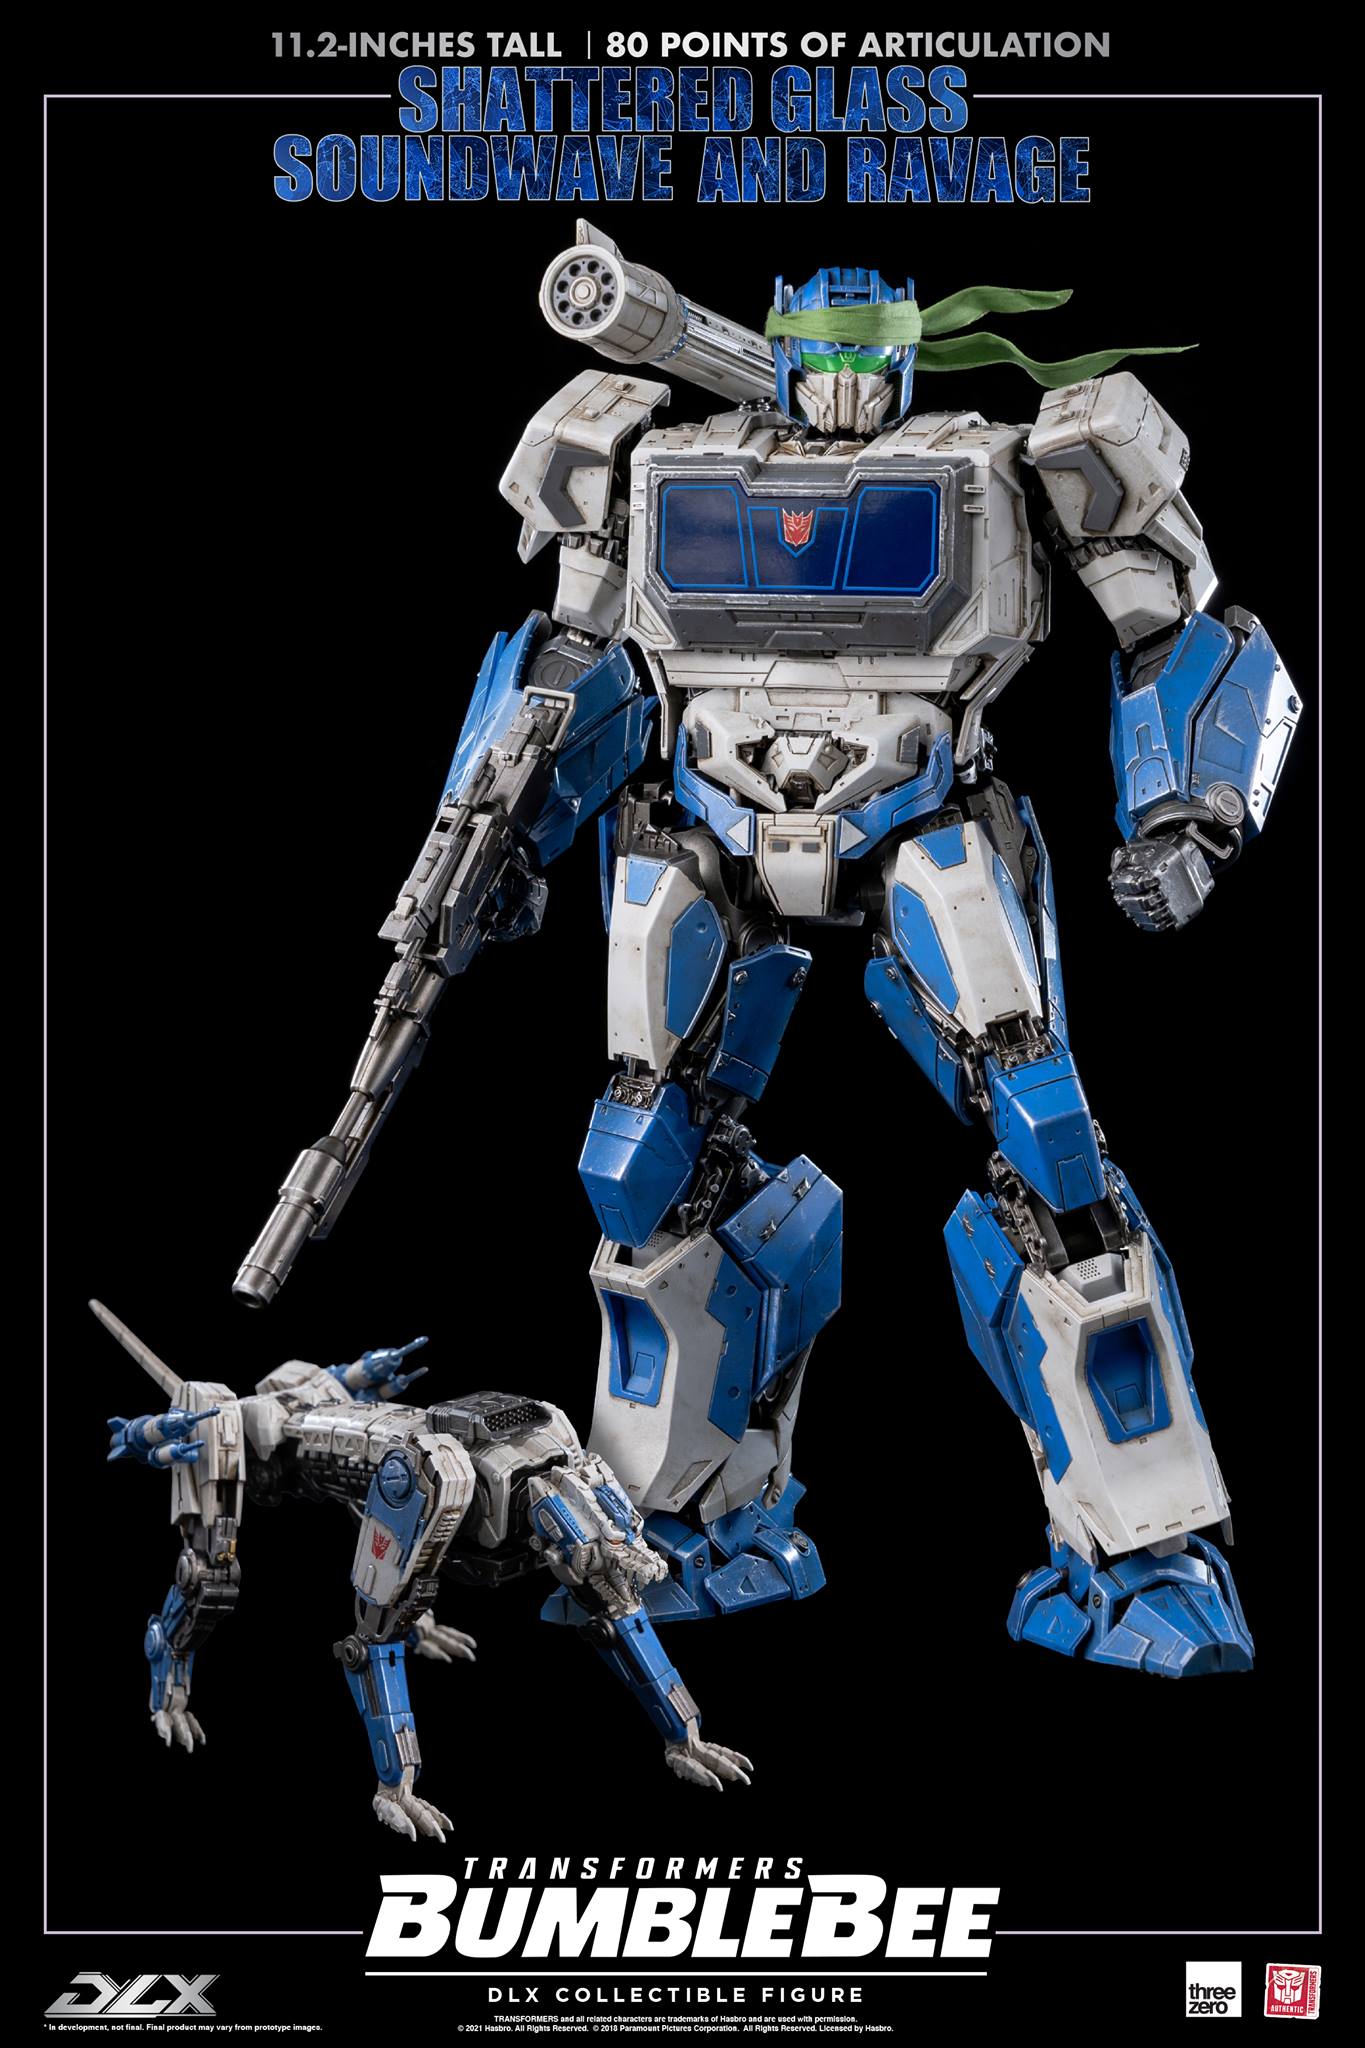 Hasbro Transformers 2009 Sdcc Soundwave Action Figure for sale online